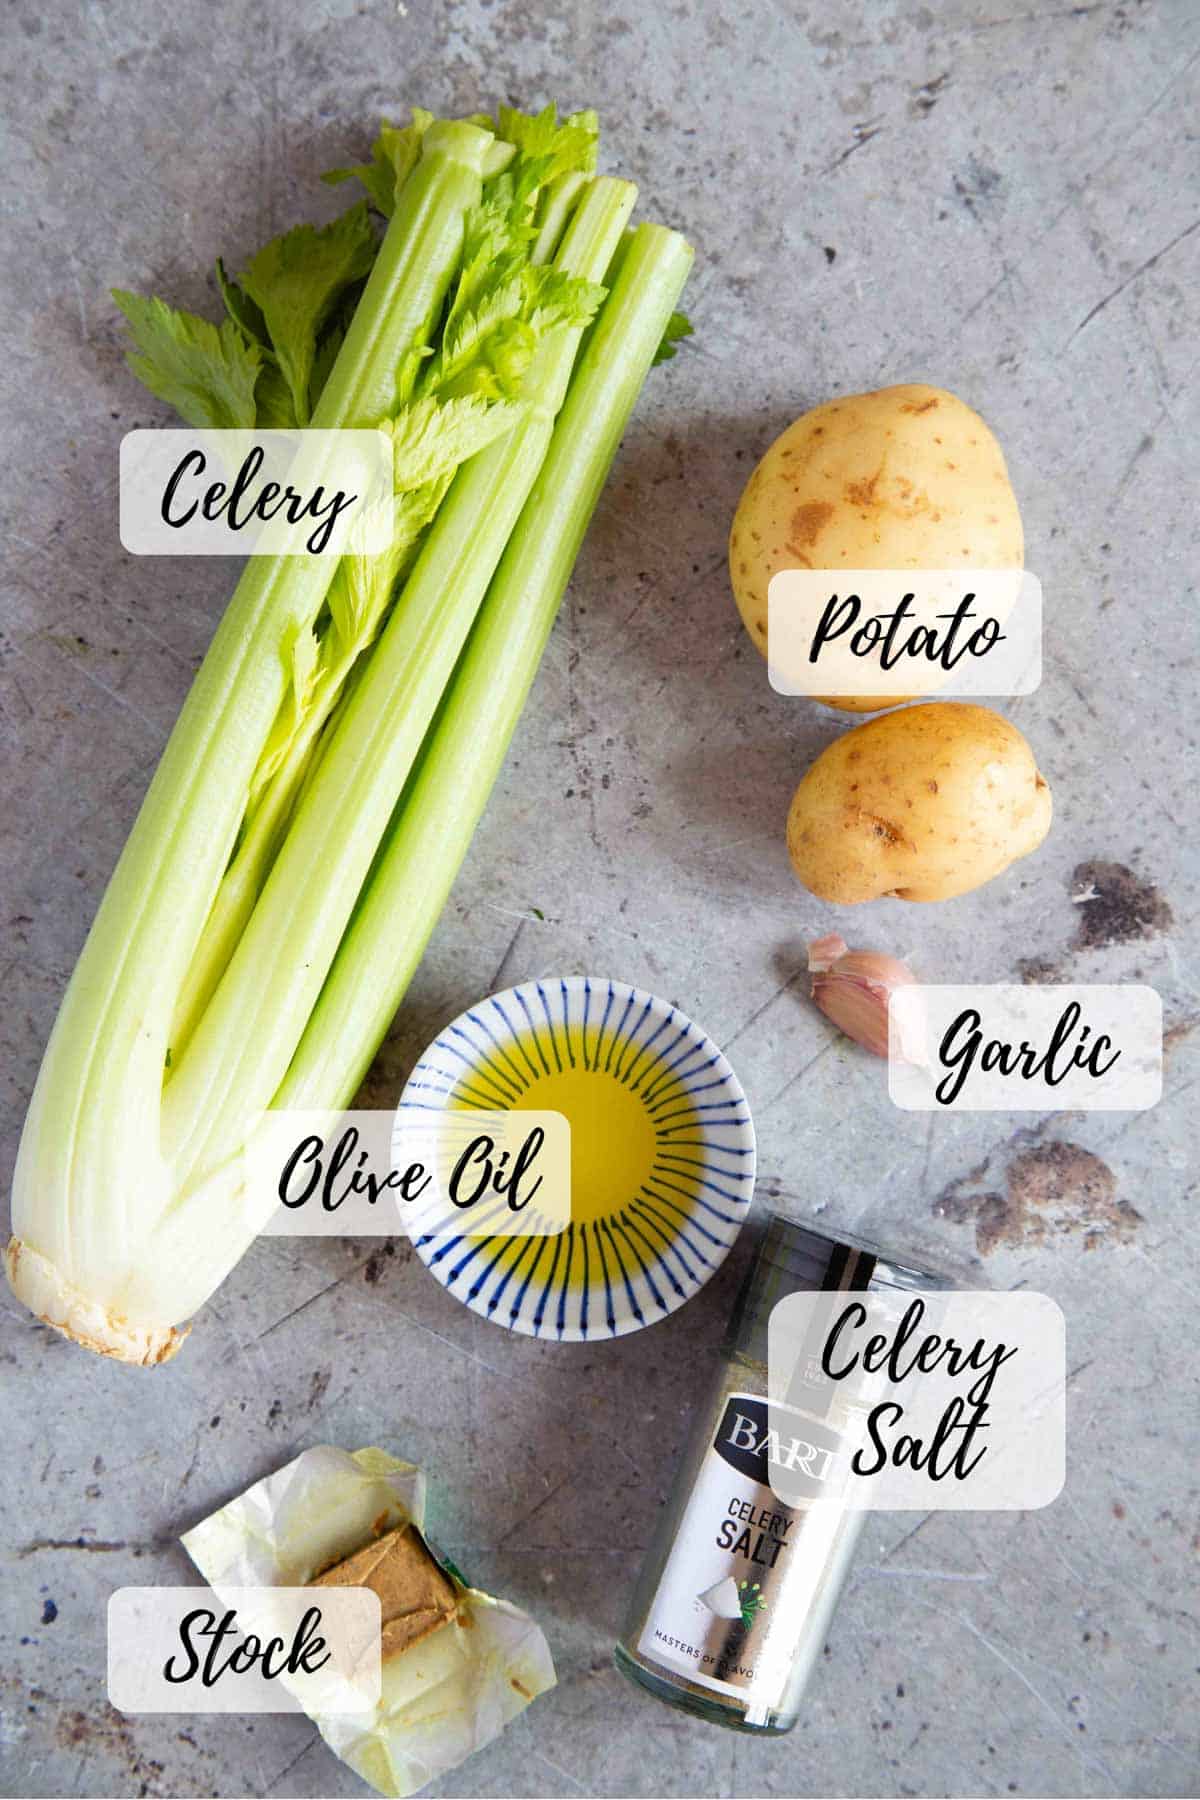 The ingredients: celery, potato, garlic, celery salt, stock and olive oil.